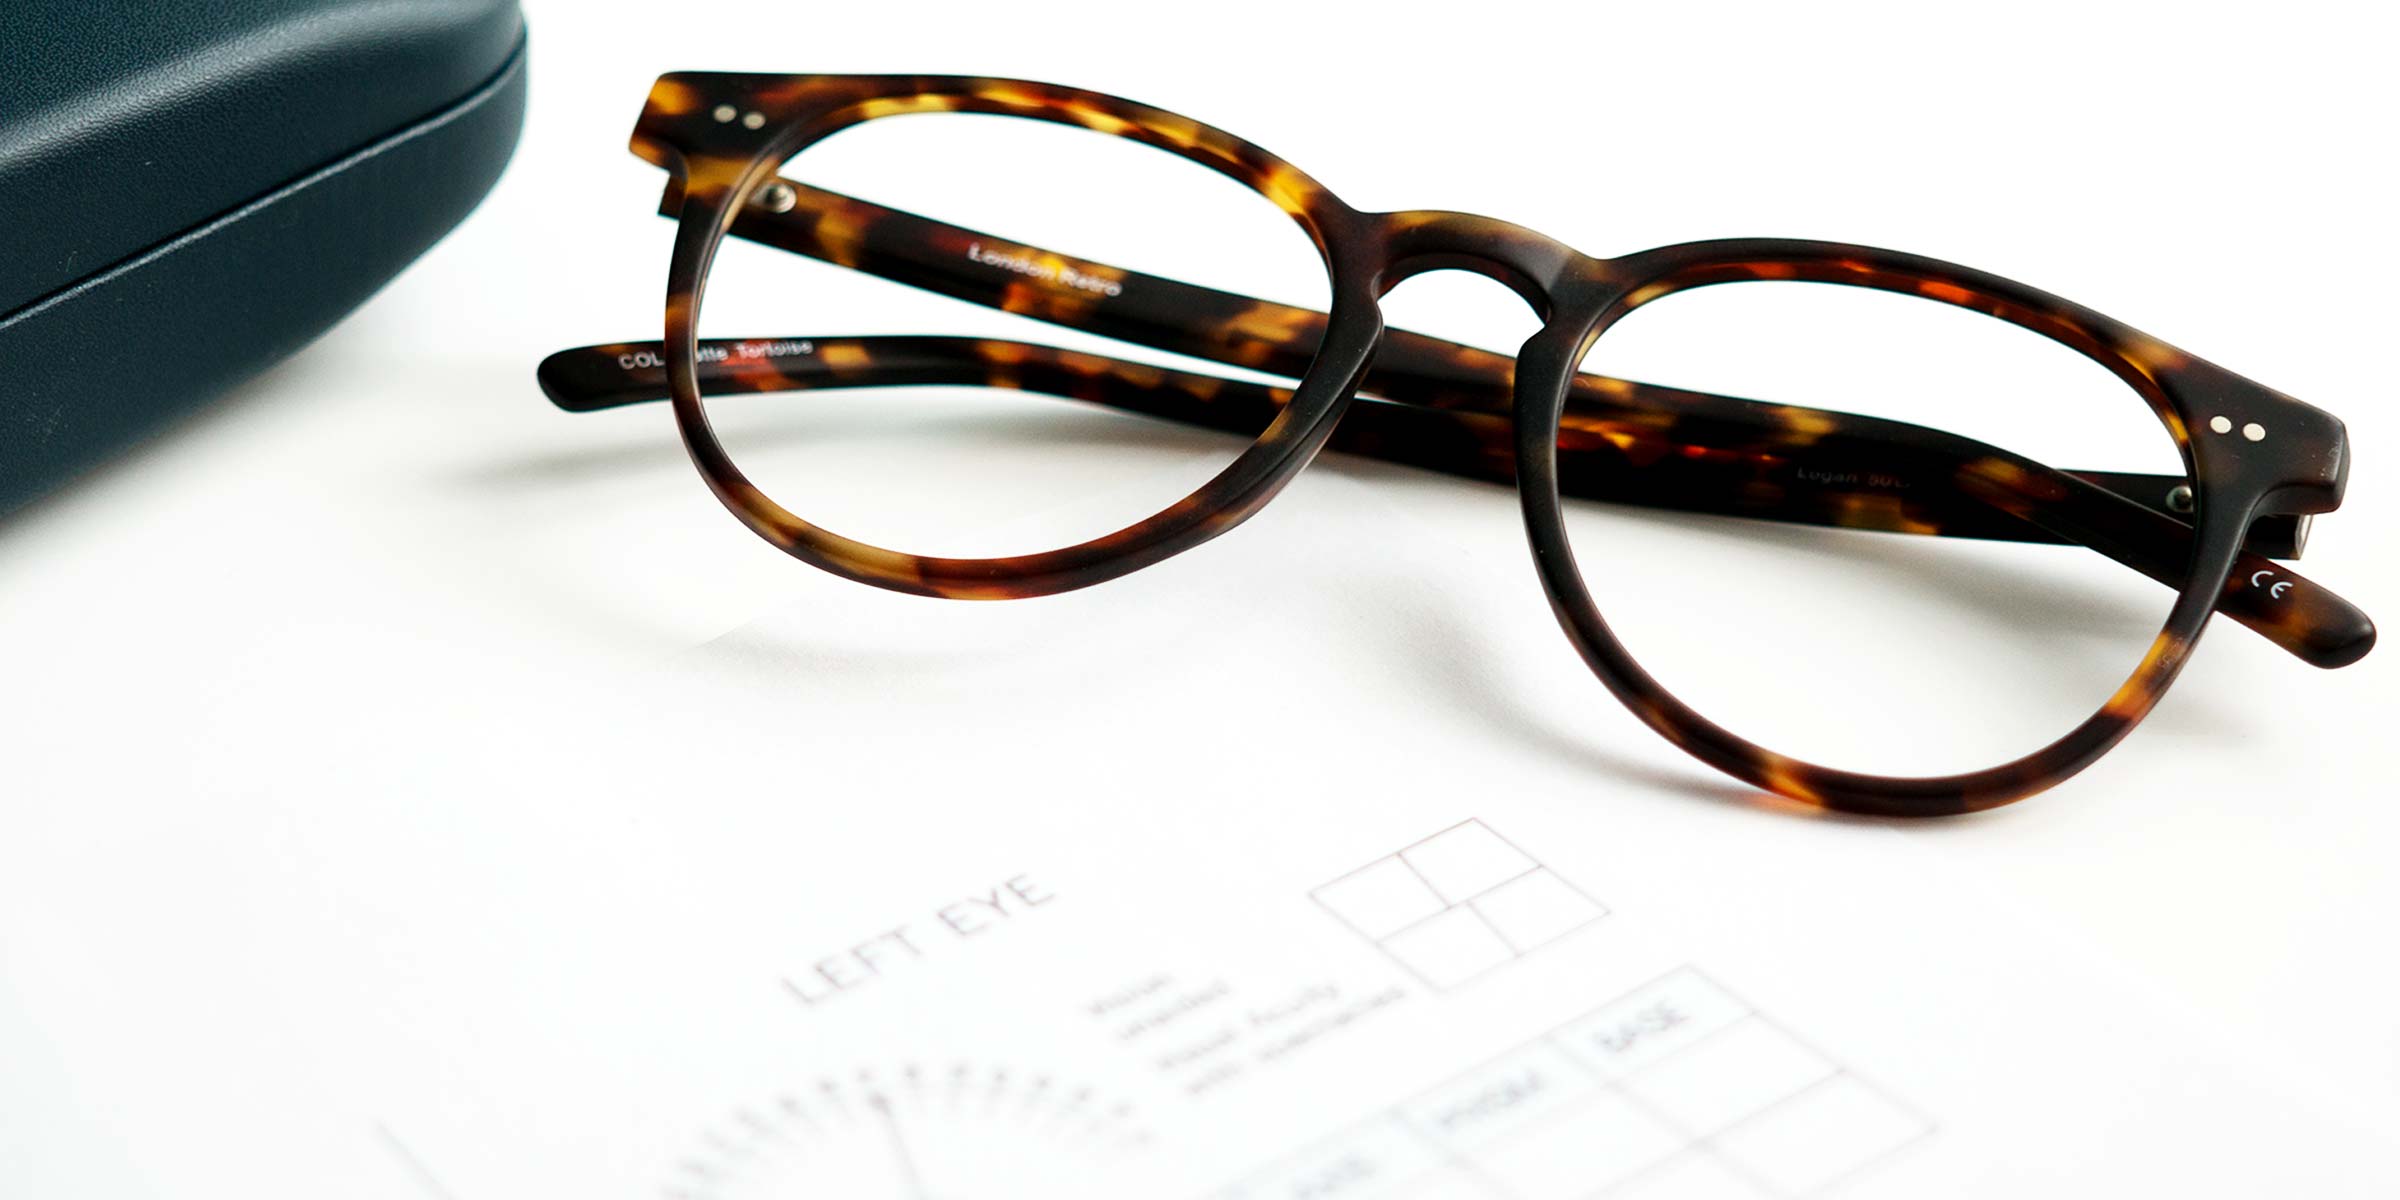 A tortoiseshell glasses frame